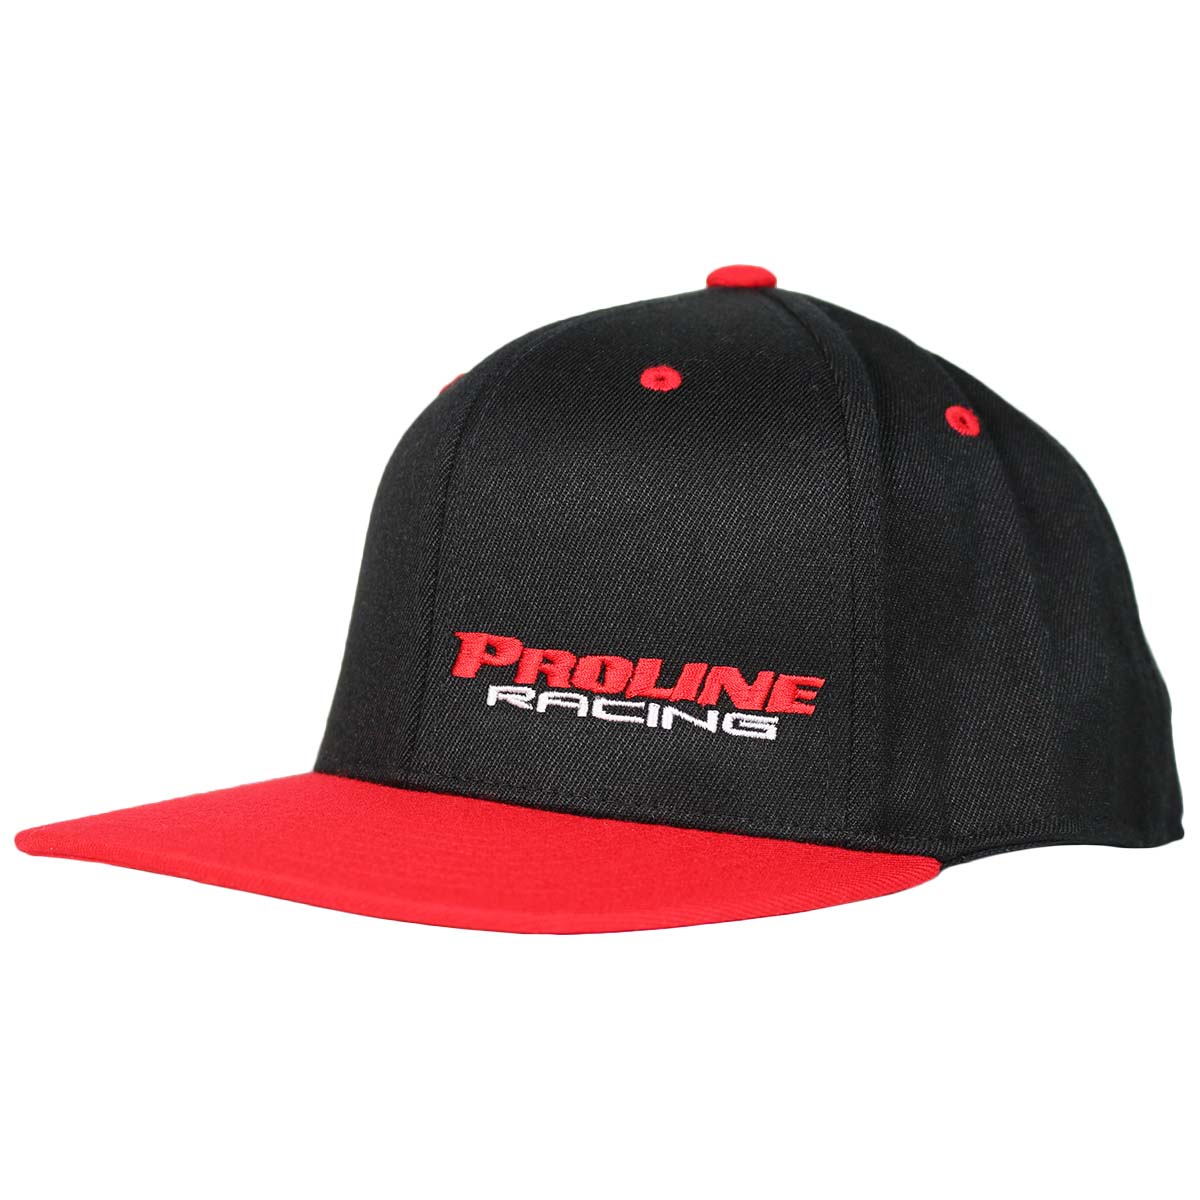 PLR FLEXFIT 110 SNAPBACK HAT - Pro Line Racing